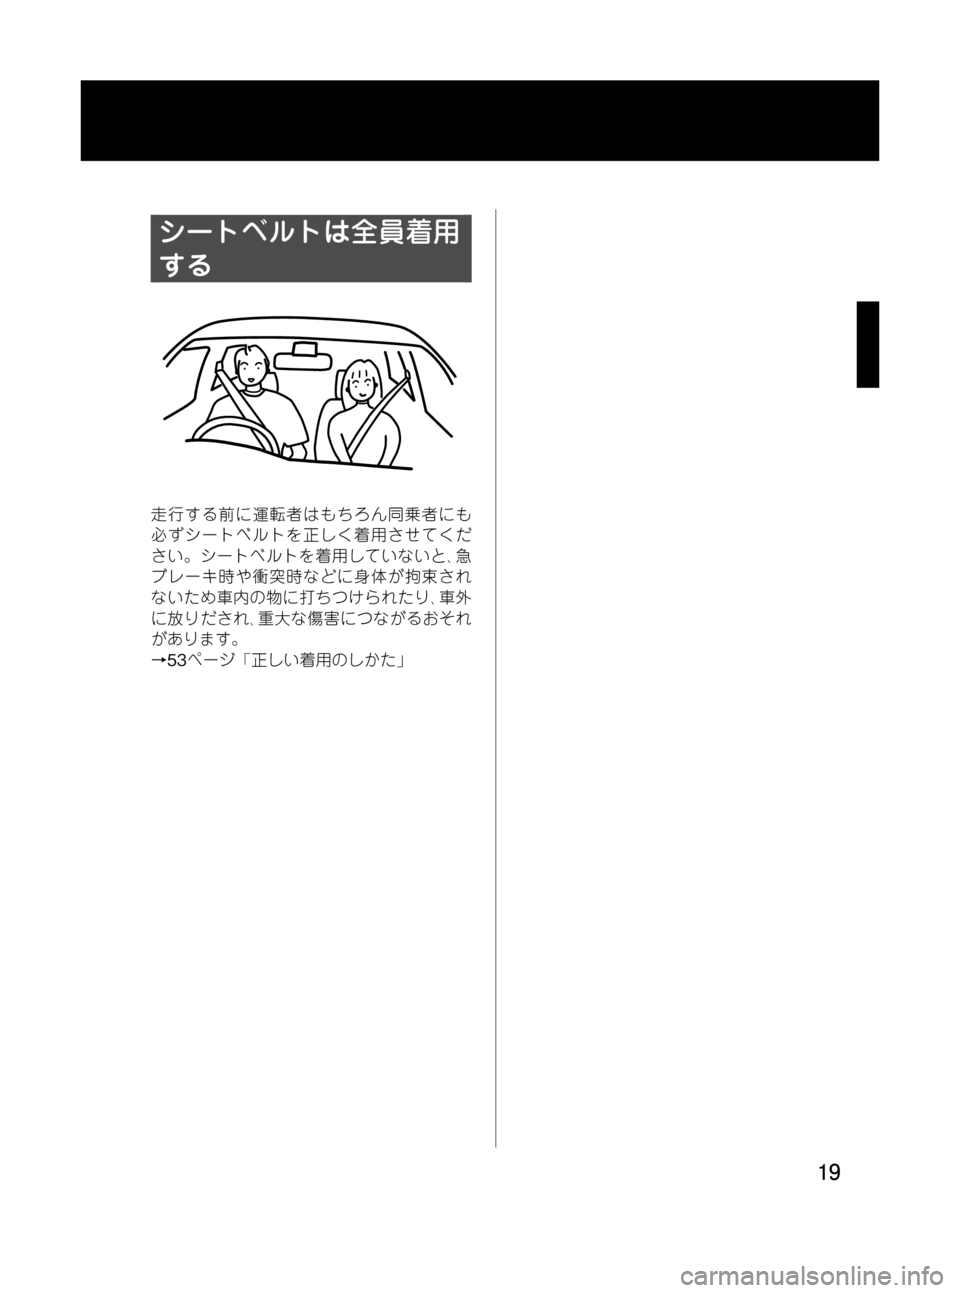 MAZDA MODEL RX 8 2008  取扱説明書 (in Japanese) Black plate (19,1)
シートベルトは全員着用
する
走行する前に運転者はもちろん同乗者にも
必ずシートベルトを正しく着用させてくだ
さい。シートベル